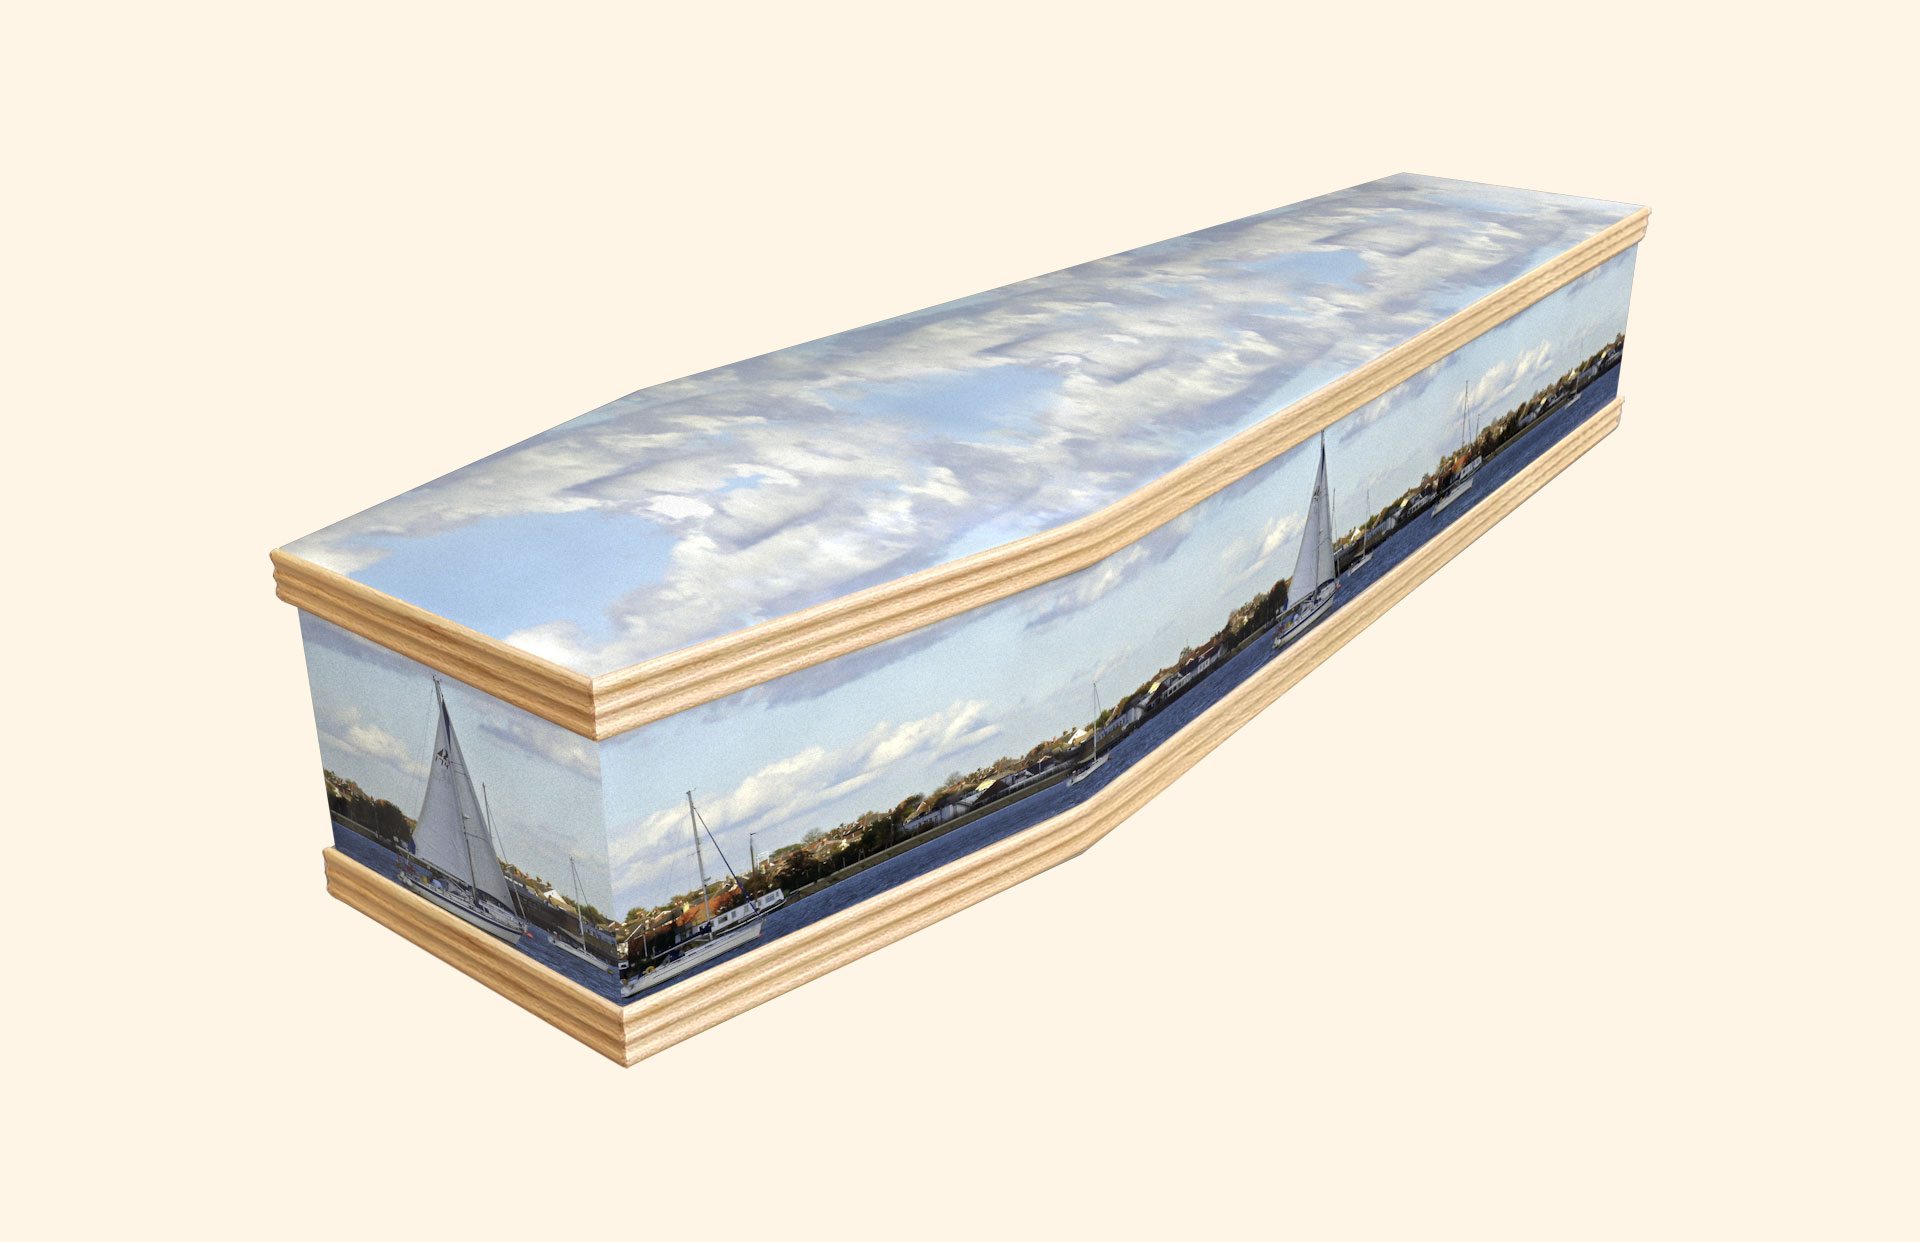 Set Sail design on a classic coffin